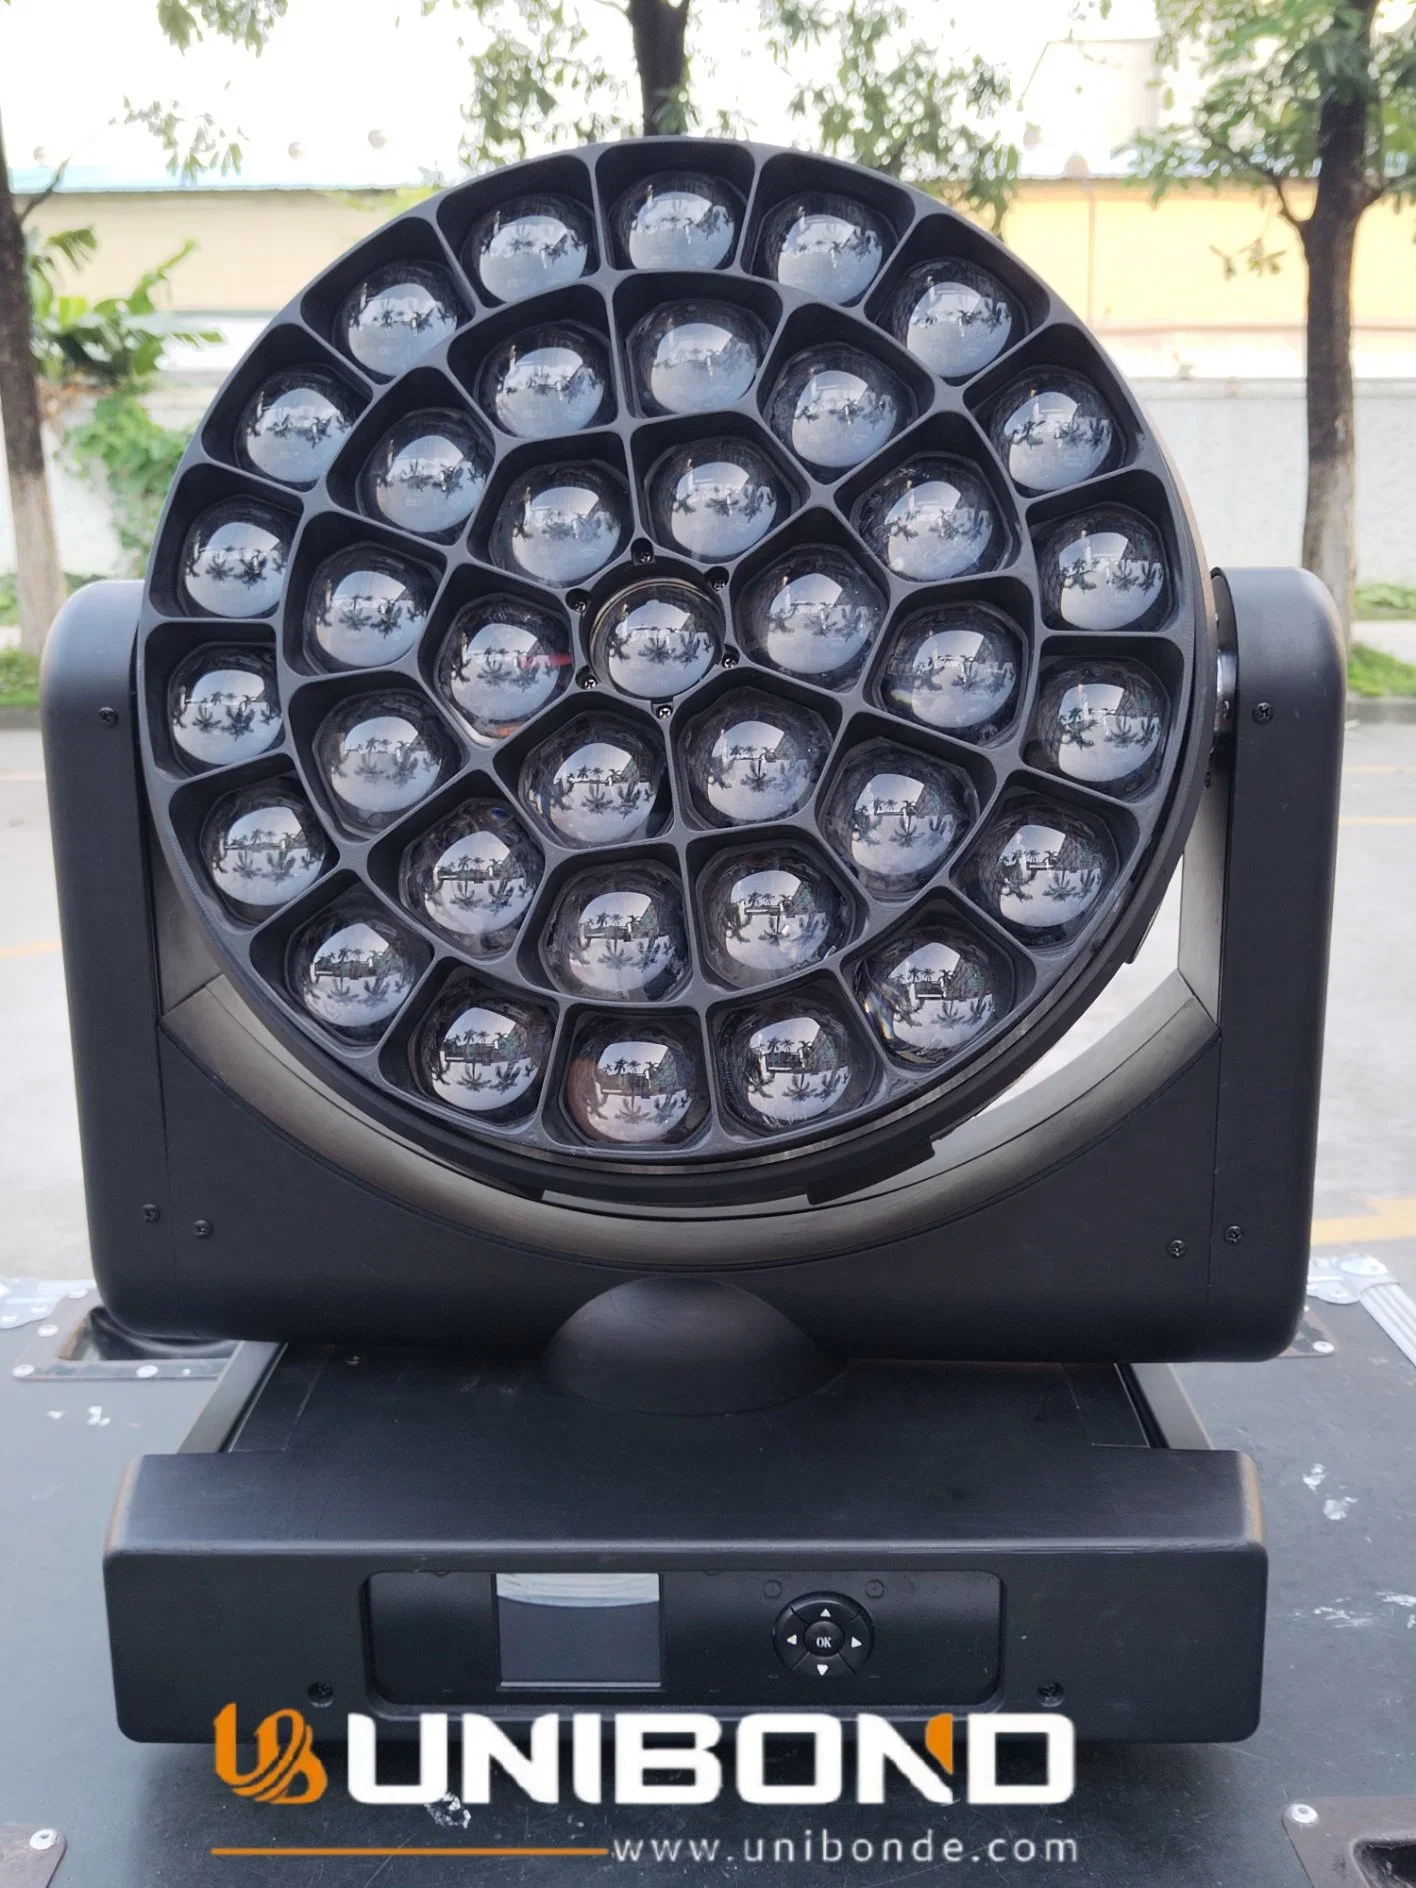 37X40W Wash Spot Beam Zoom LED Moving Head Light Bee Eye K25 Stage Lighting LED Moving Head DJ Lighting